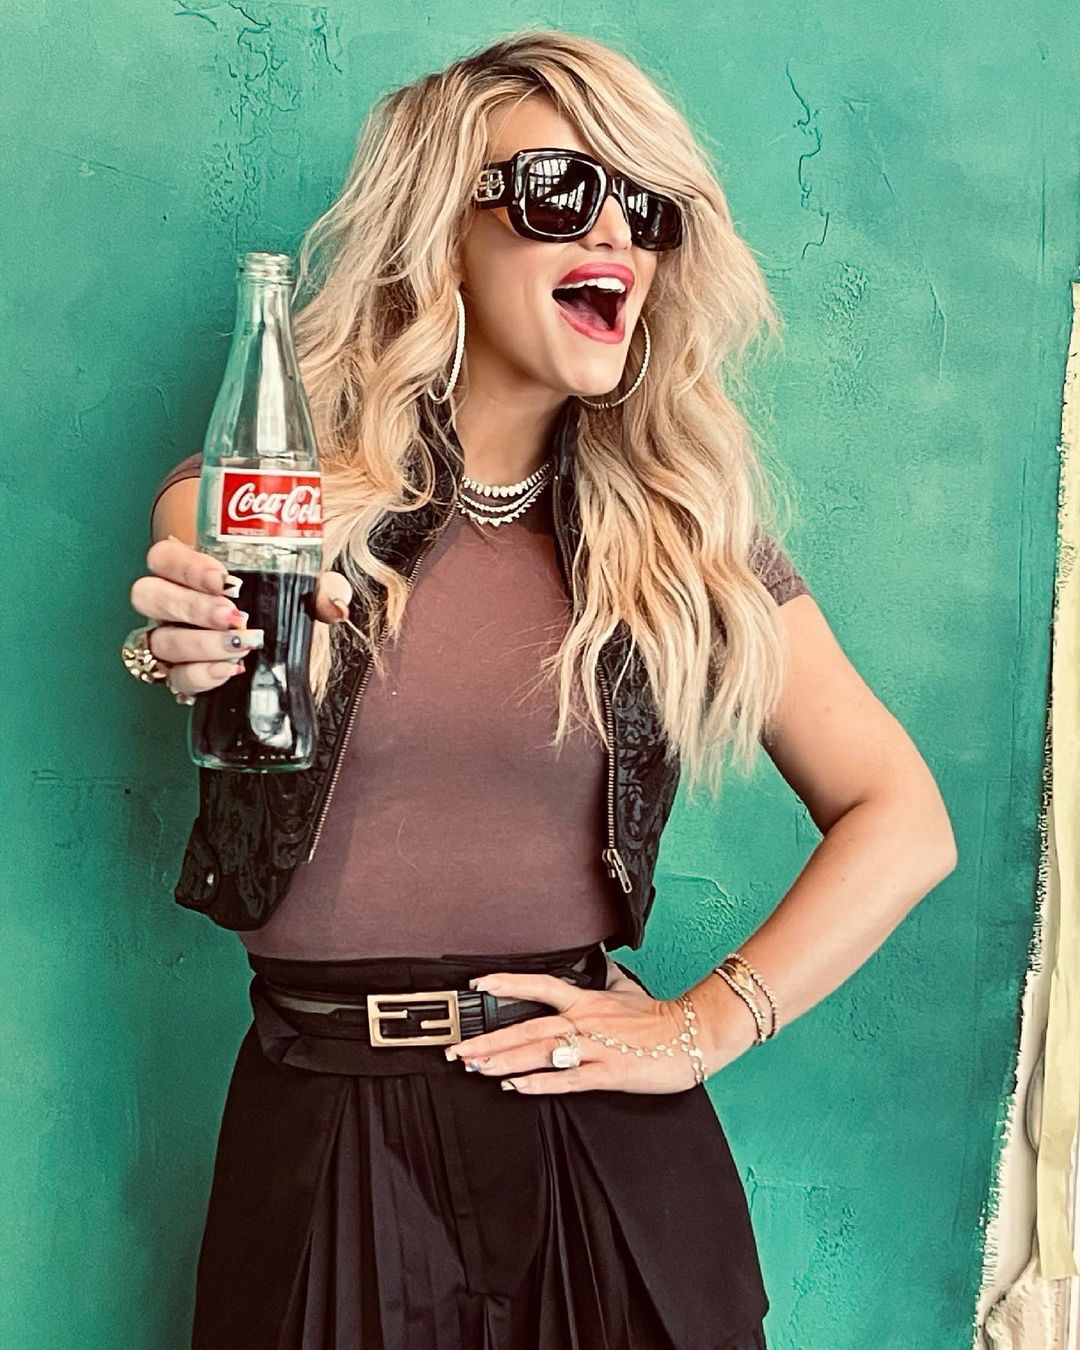 Jessica Simpson holding a coke bottle